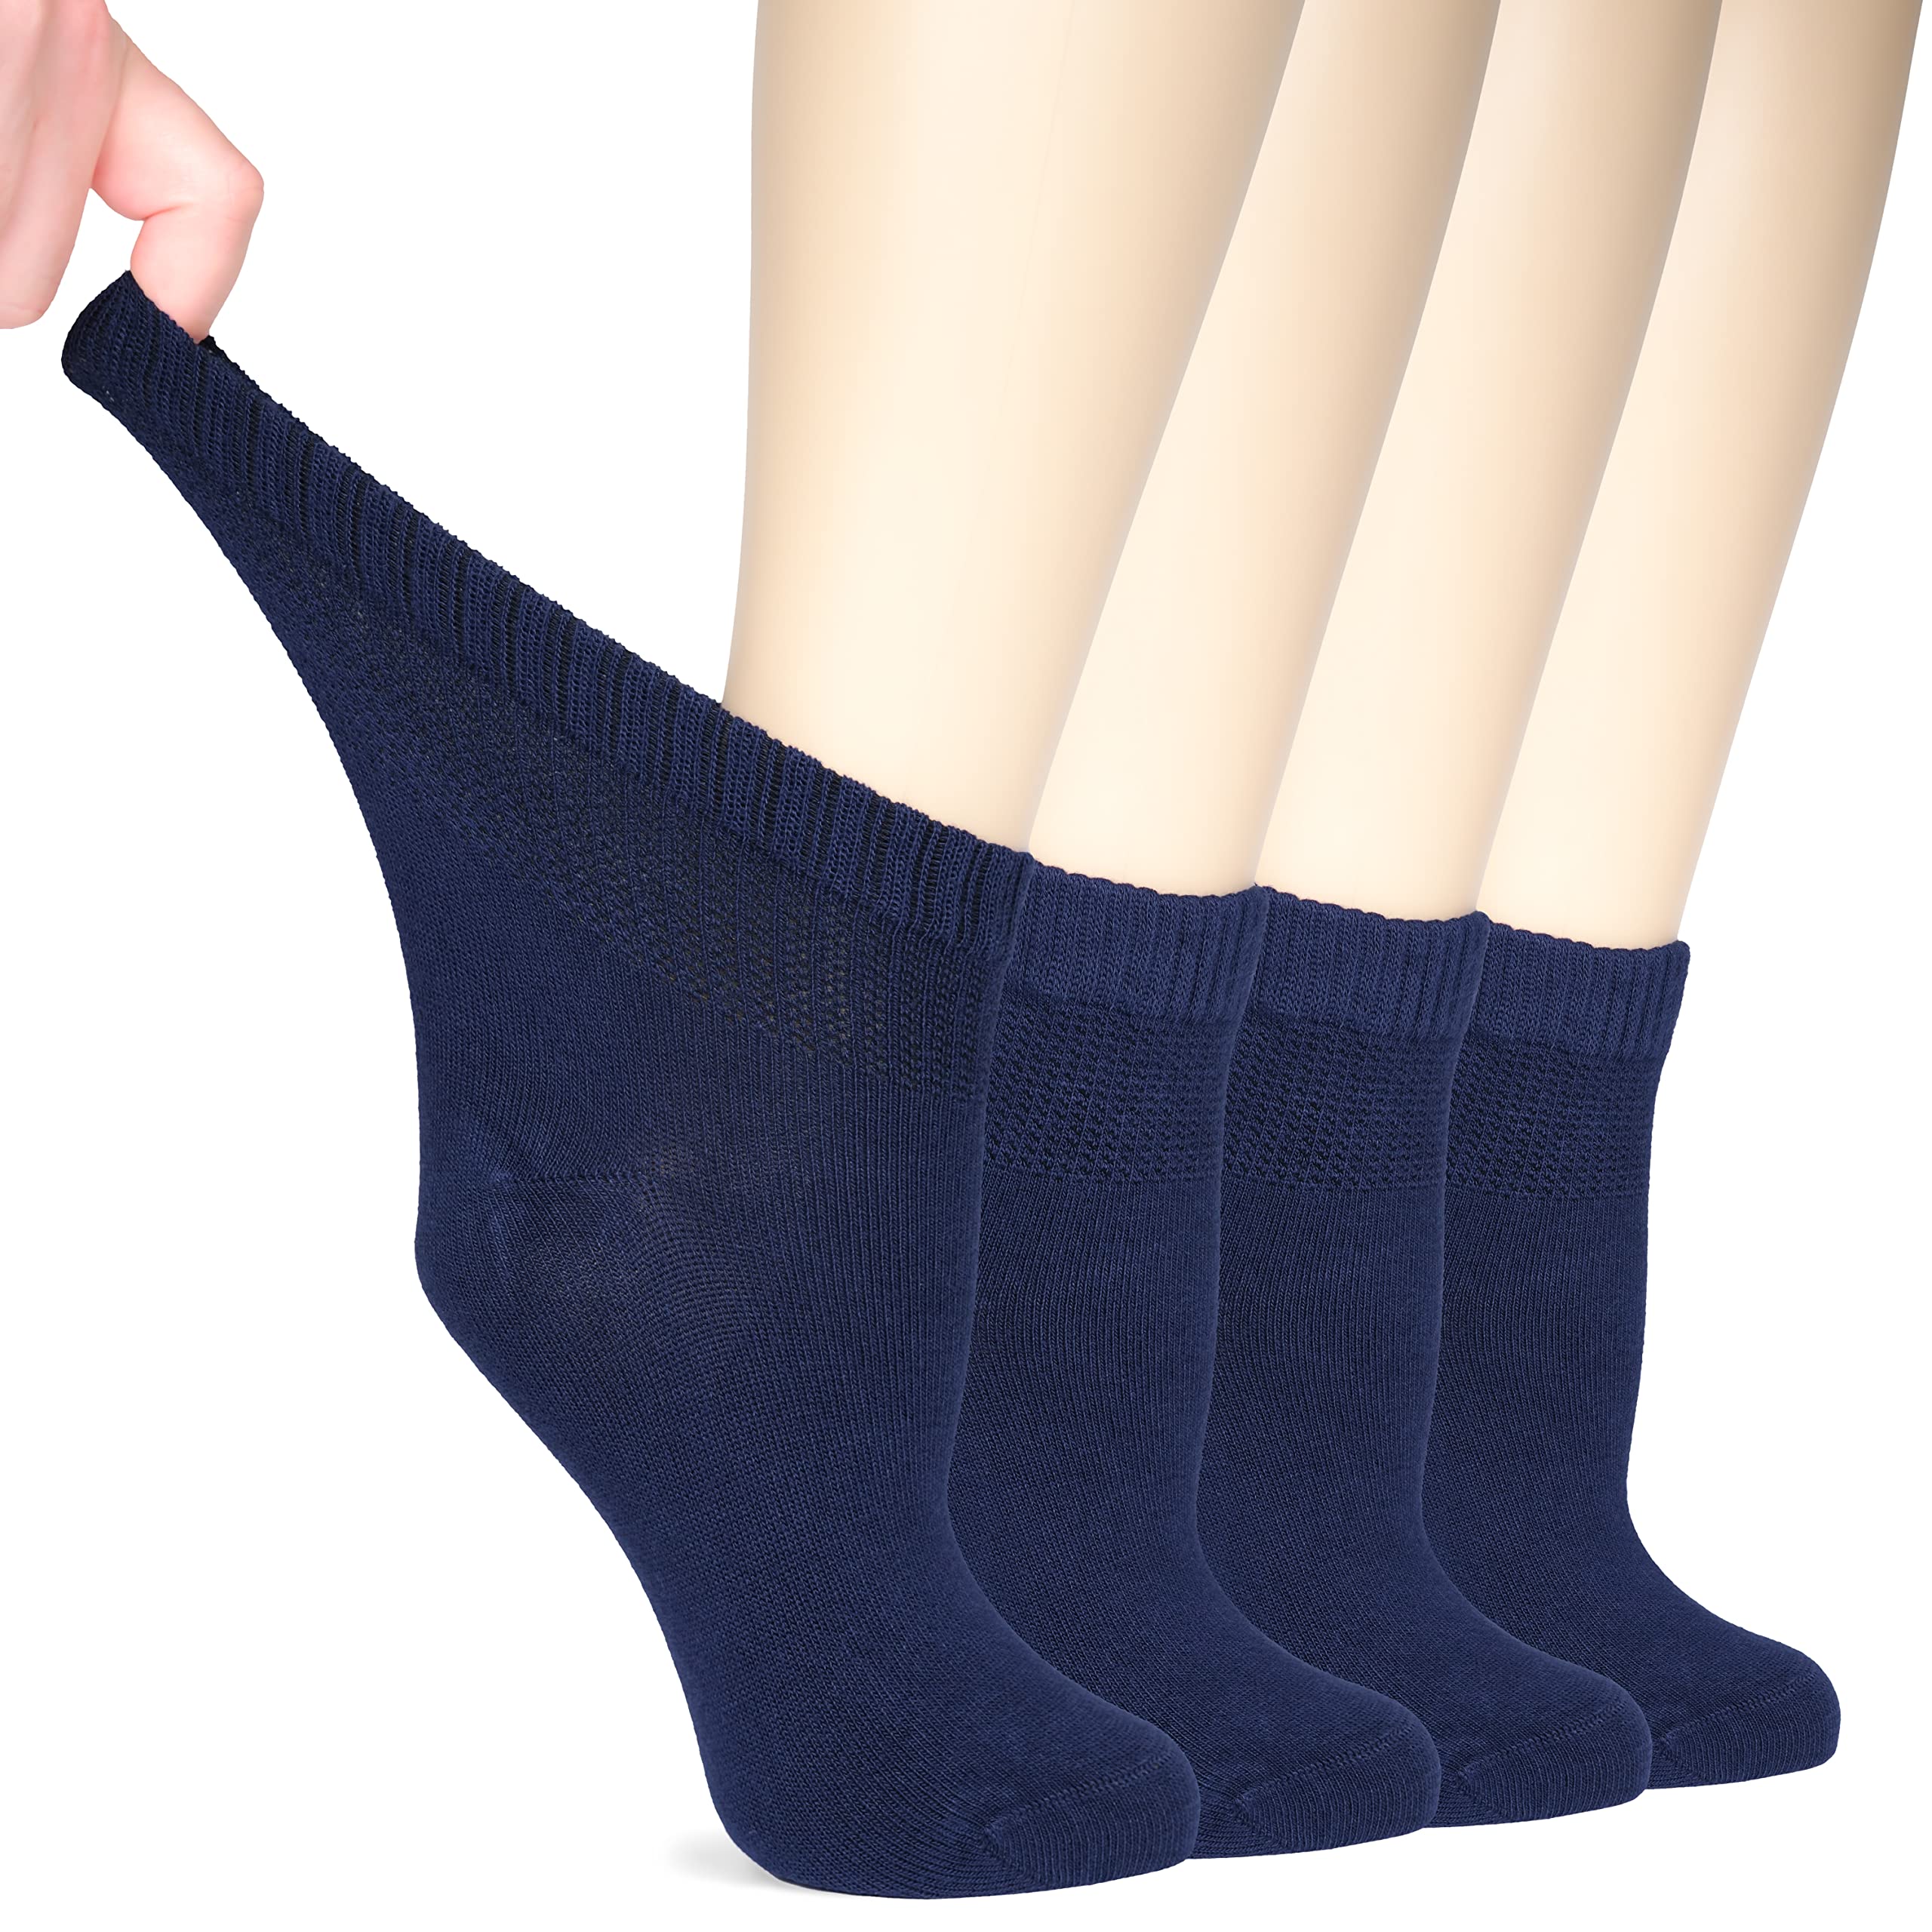 Hugh Ugoli Women Diabetic Ankle Socks, Super Soft & Thin Bamboo Socks, Wide & Loose, Non-Binding Top & Seamless Toe, 4 Pairs, Na